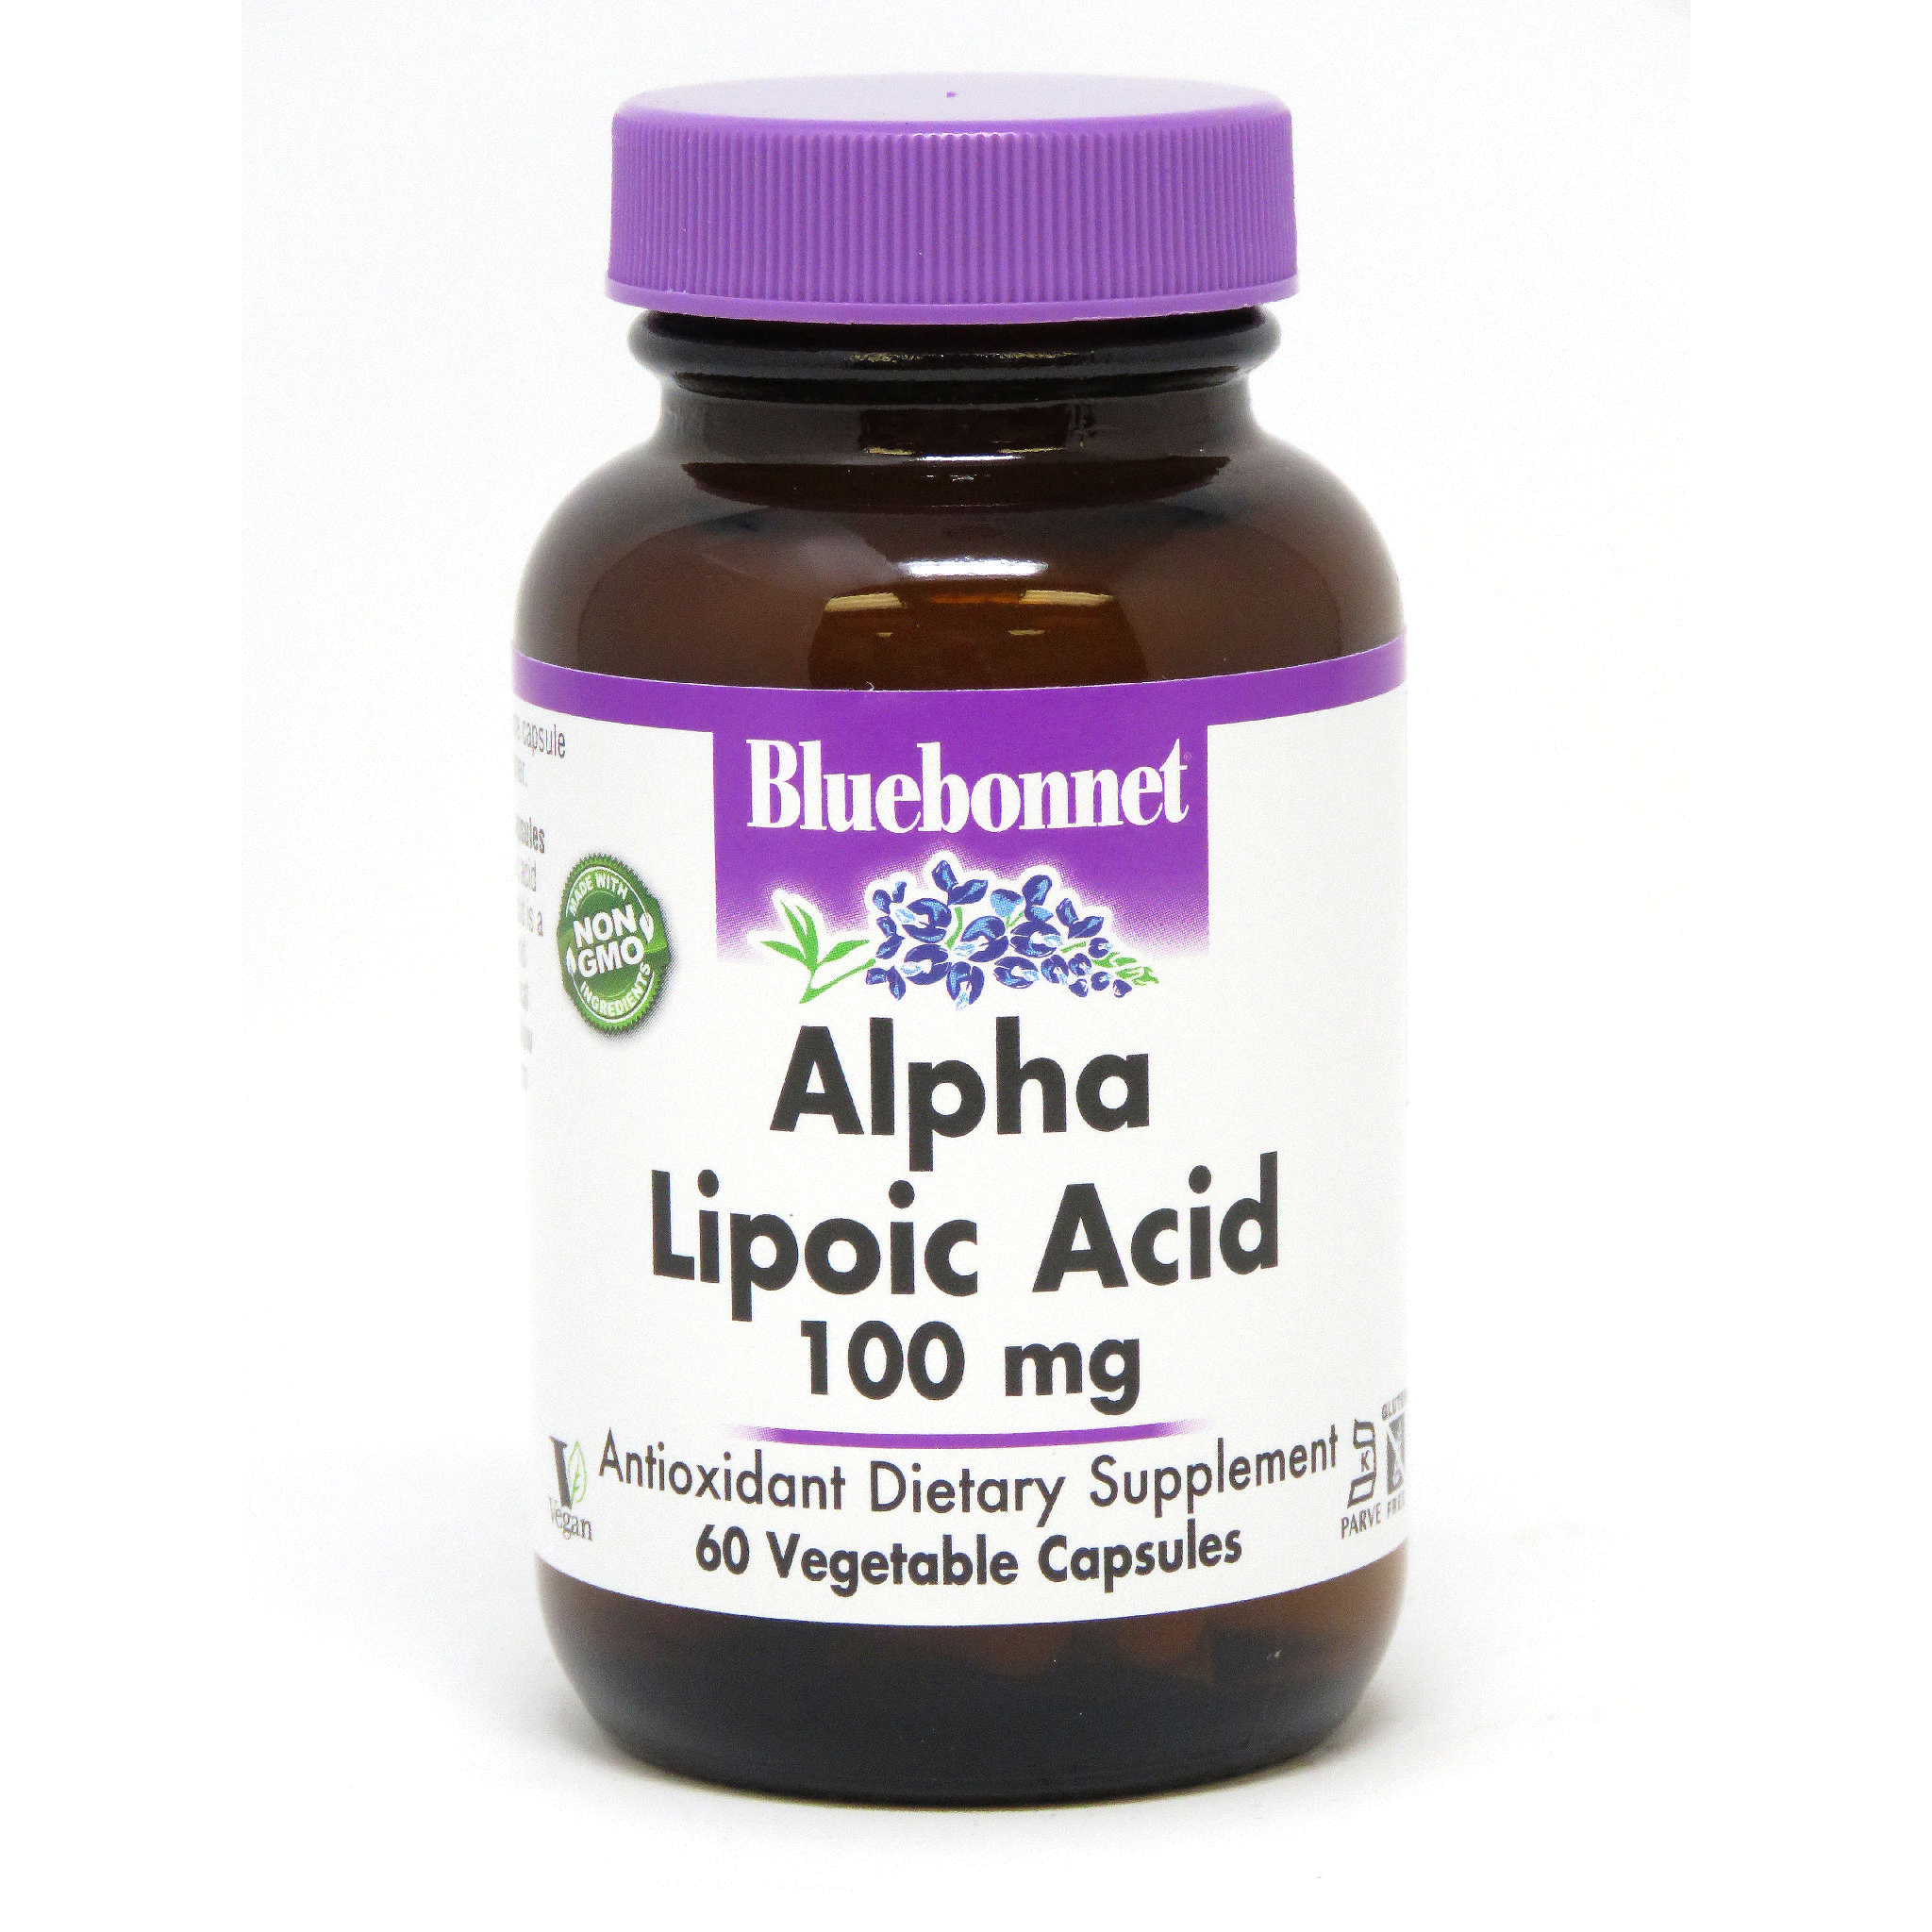 Bluebonnet - Lipoic Acid 100 mg Alpha